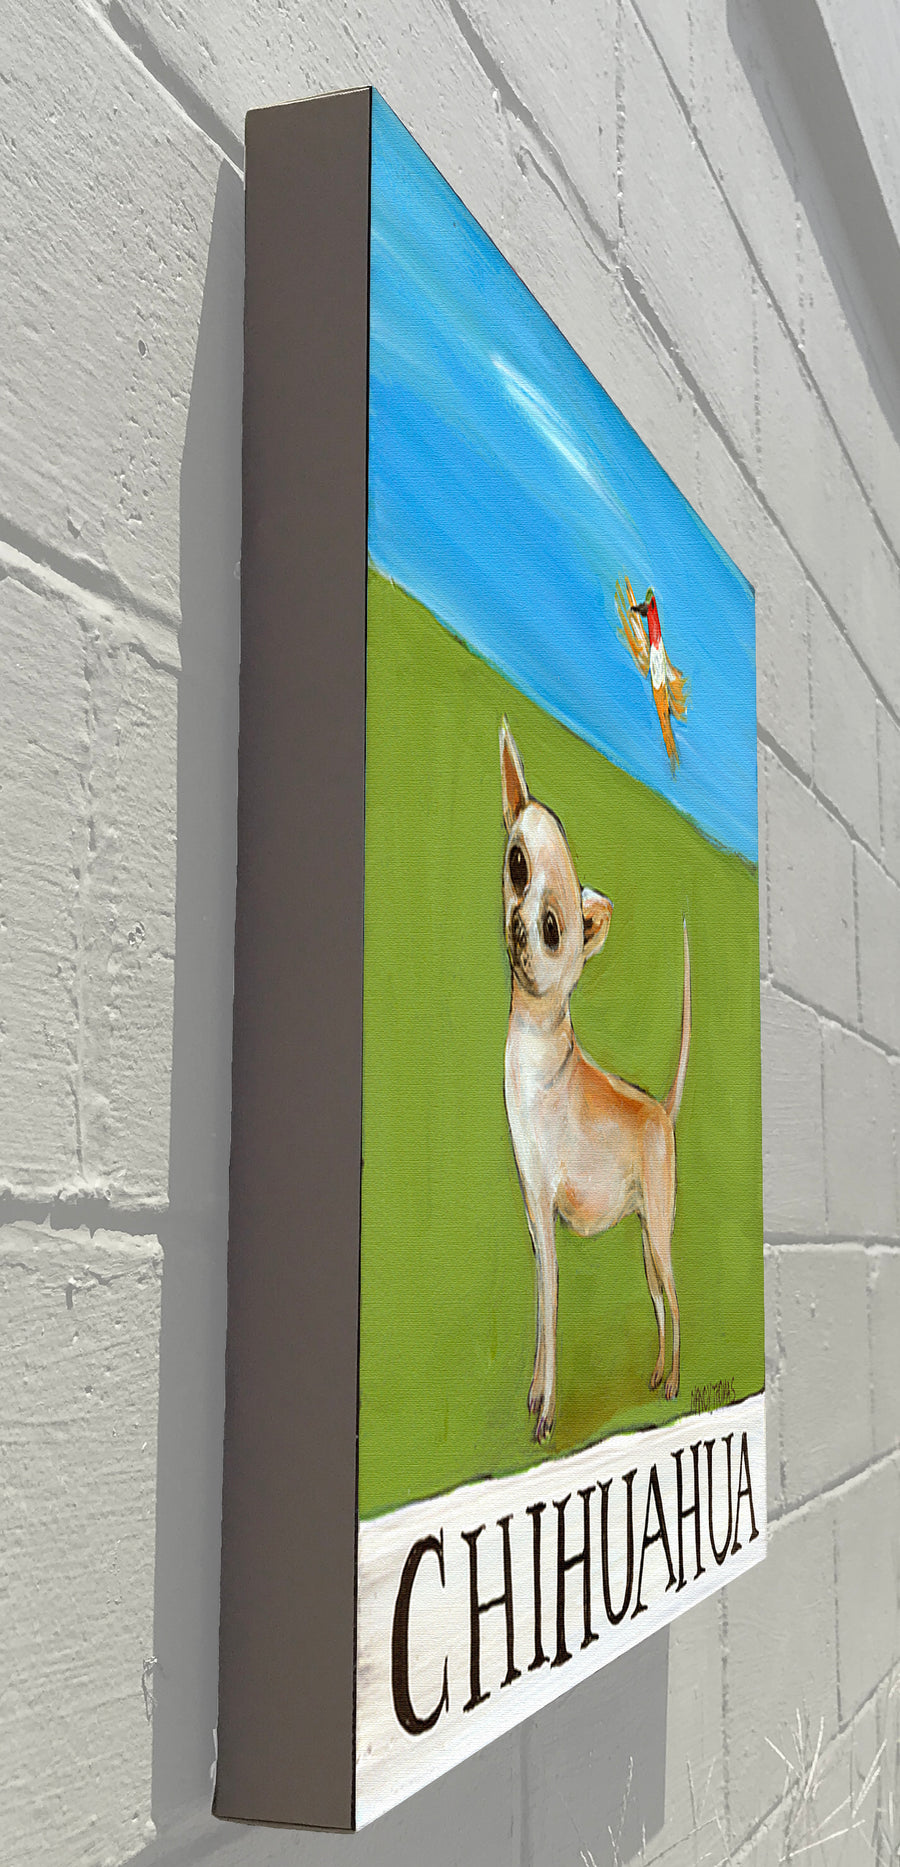 Gallery Grand - Doggie - Chihuahua